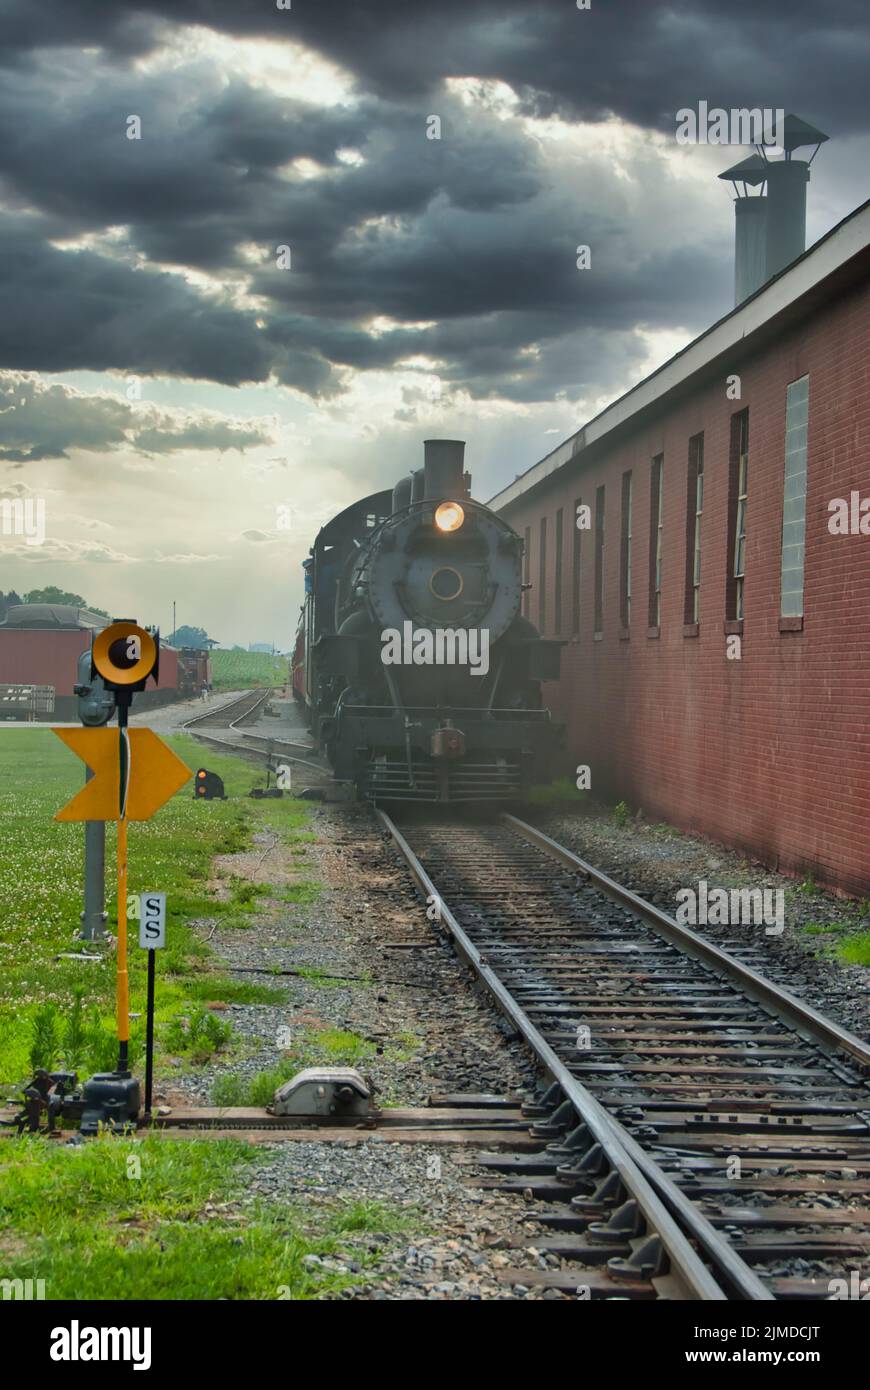 Steam Engine Locomotive with Passenger cars Stock Photo